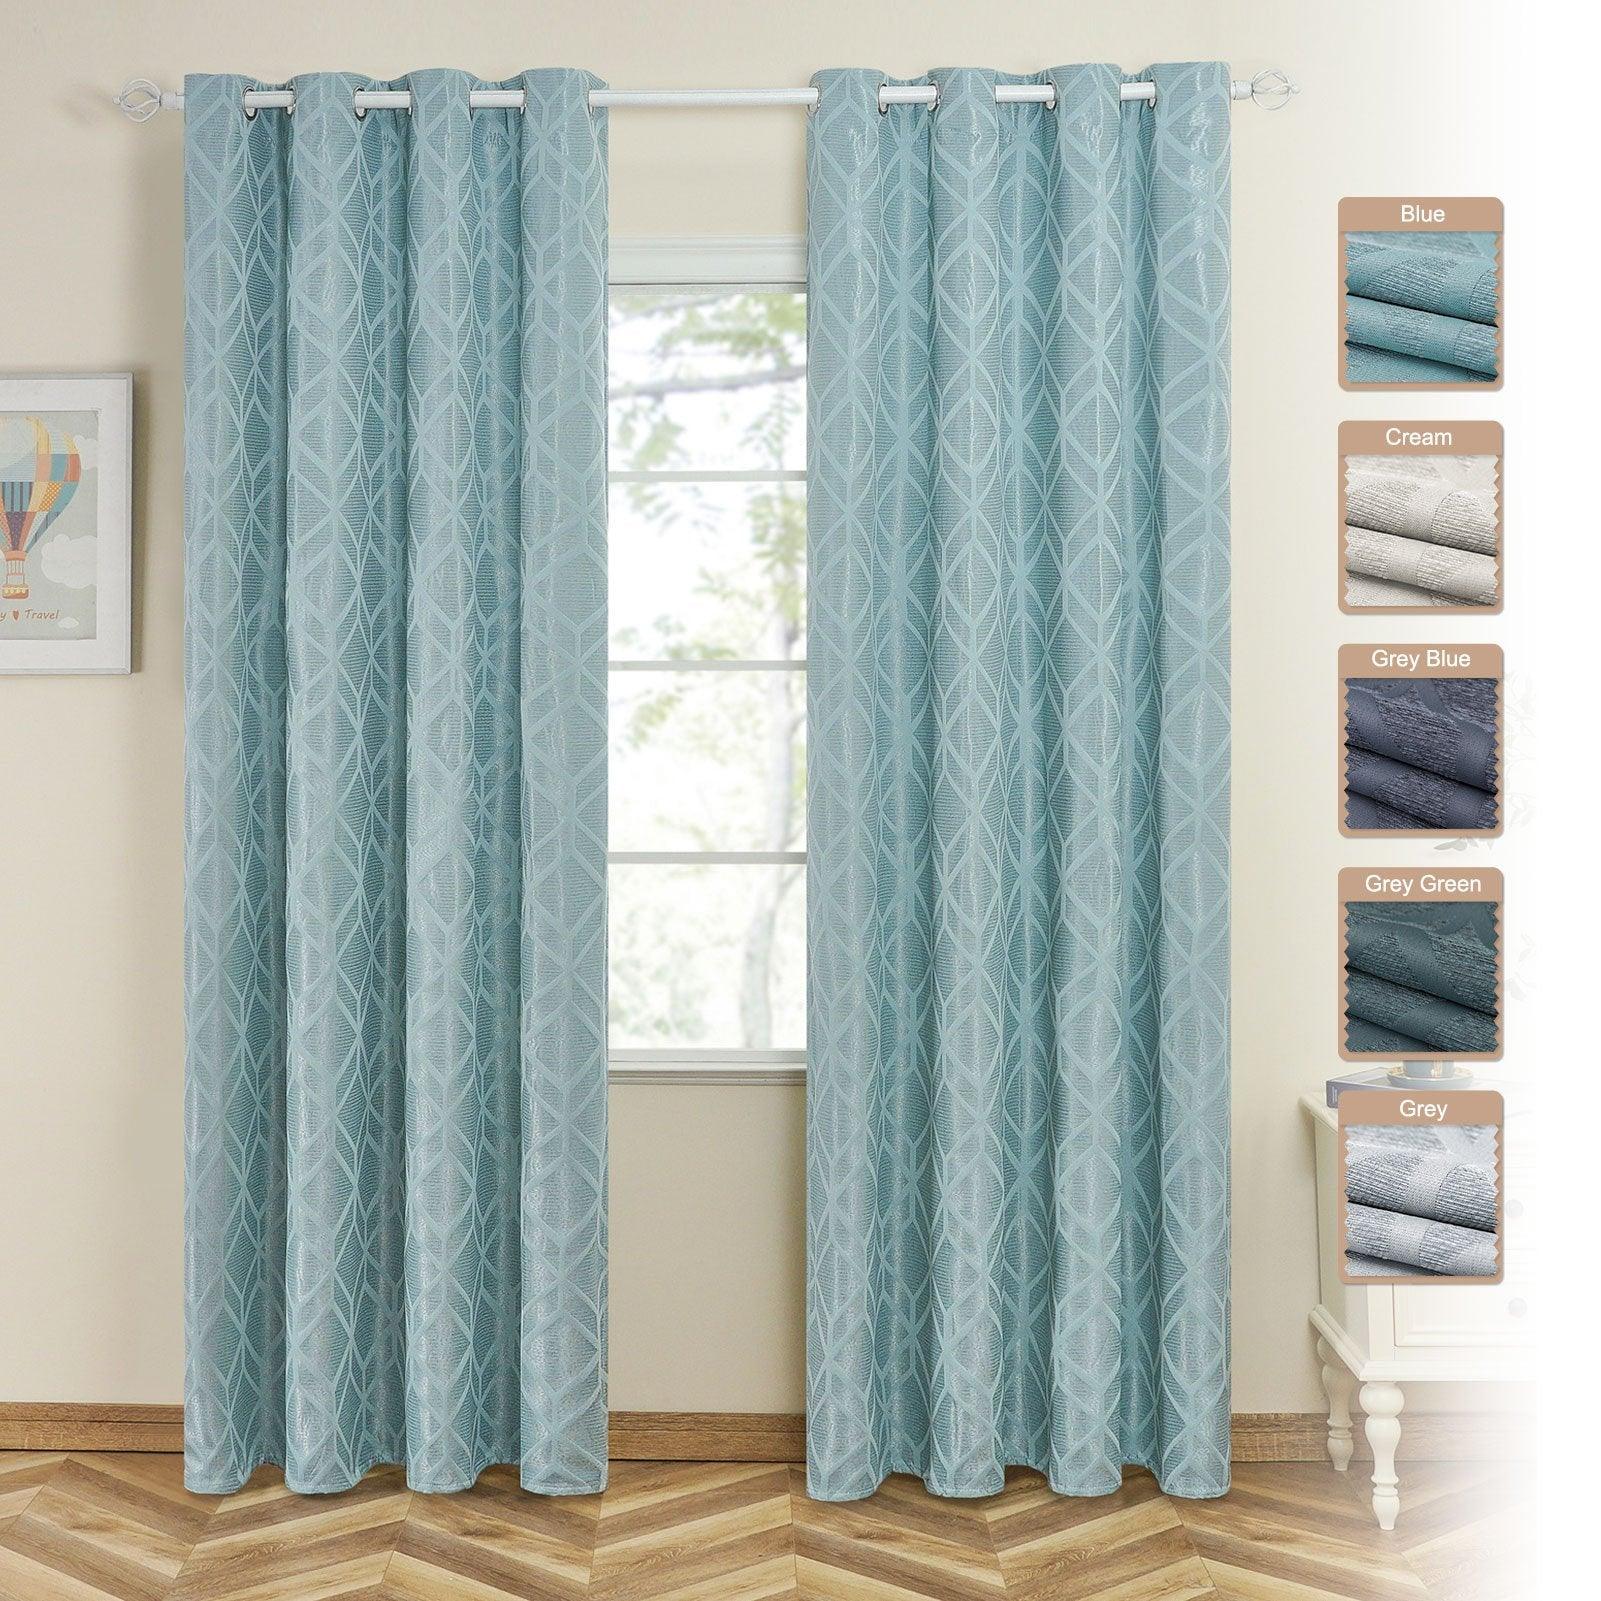 Topfinel Jacquard Room Darkening Curtains for Bedroom Living Room, thermal curtains for winter - Topfinel